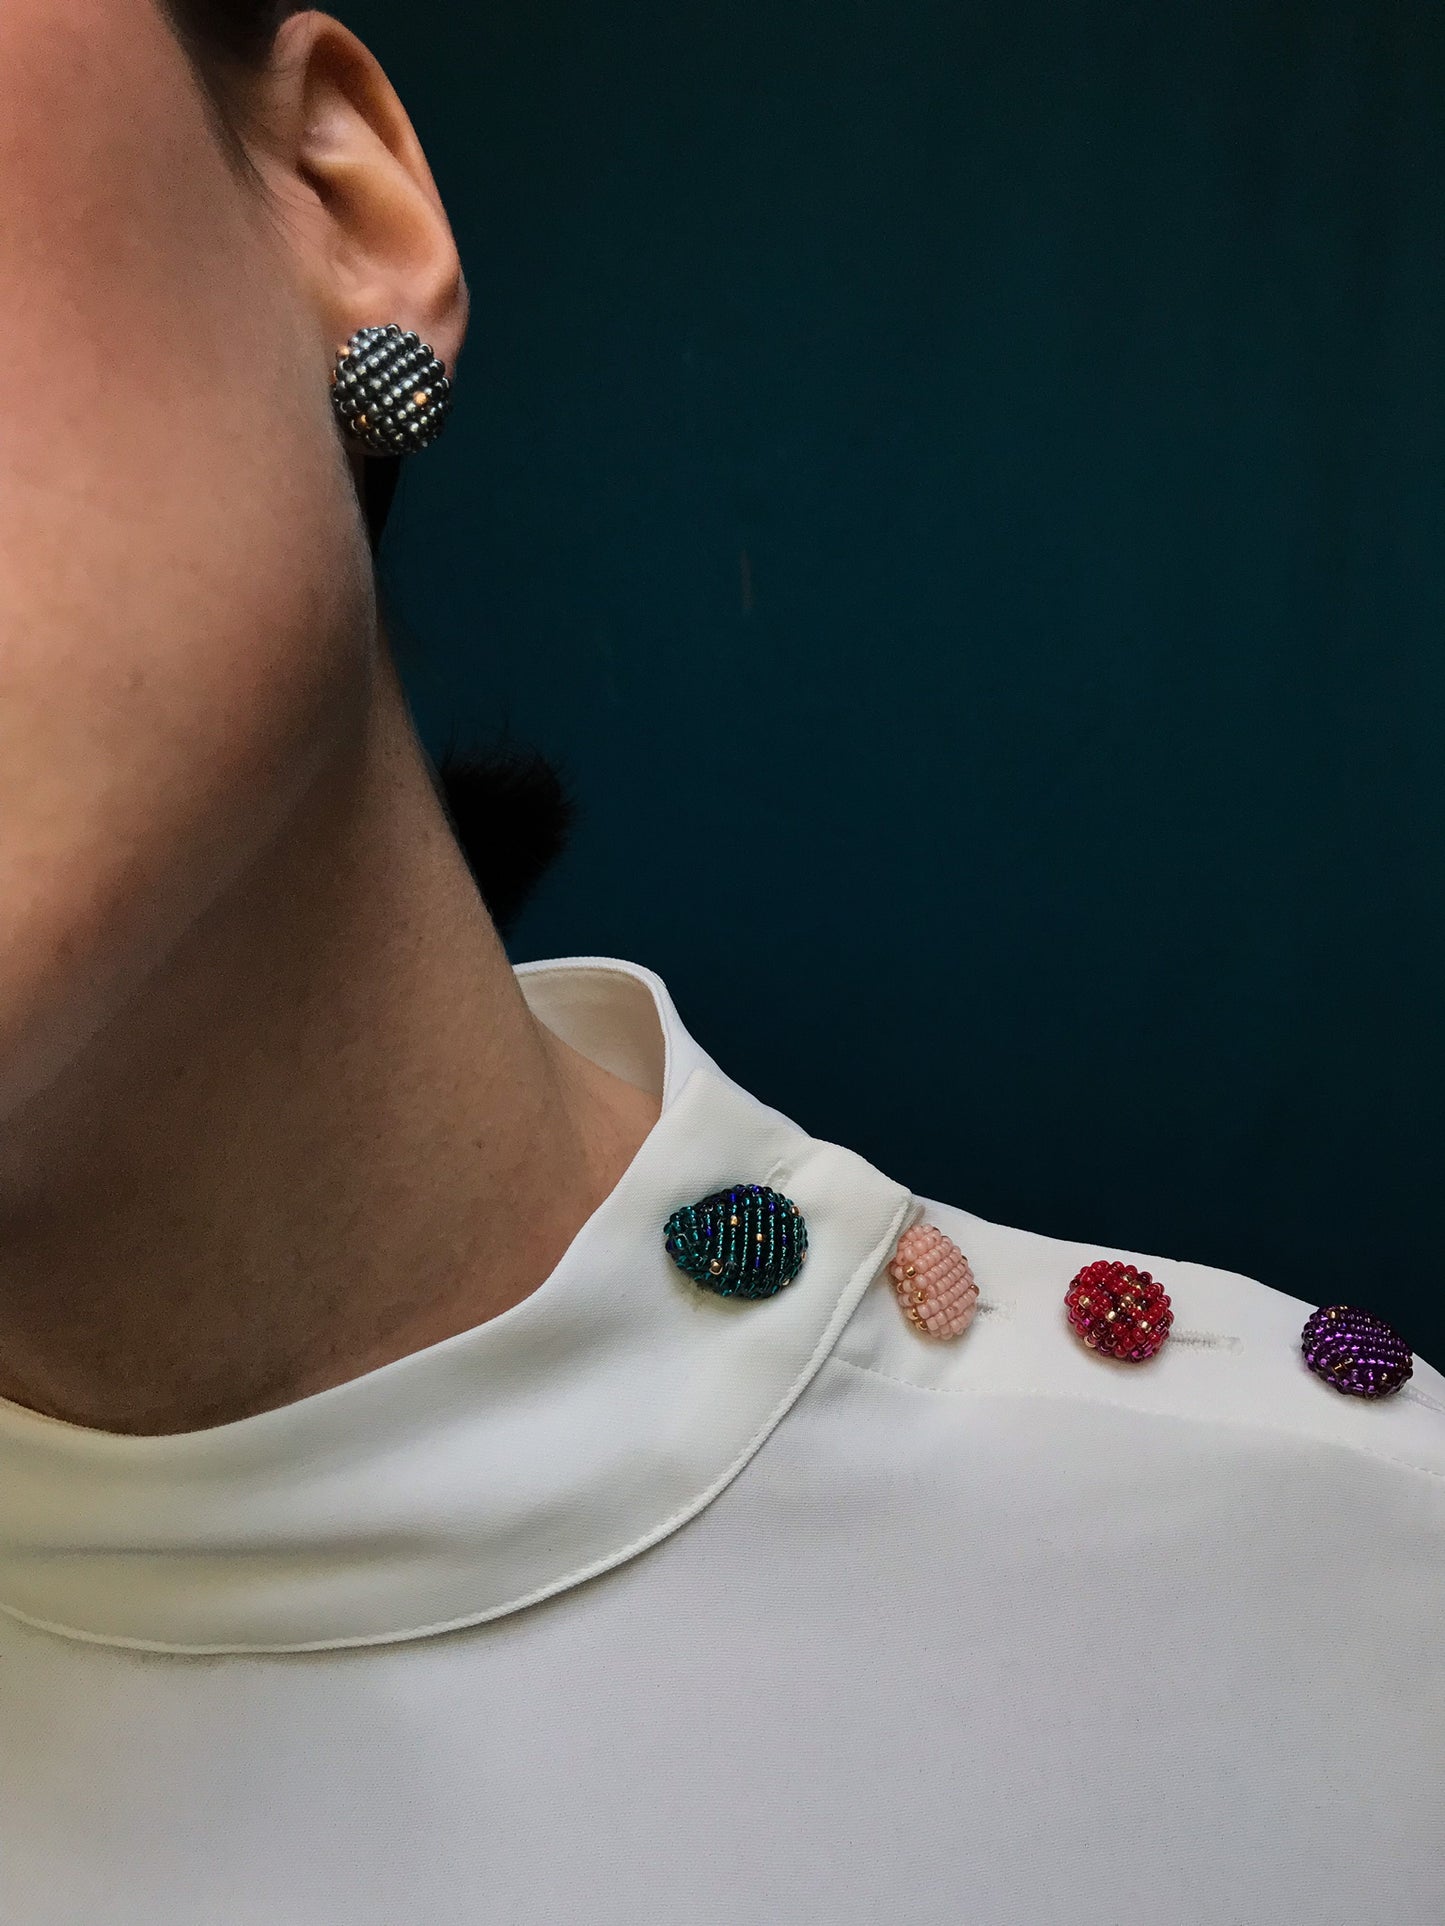 More Earrings by Susana Vega